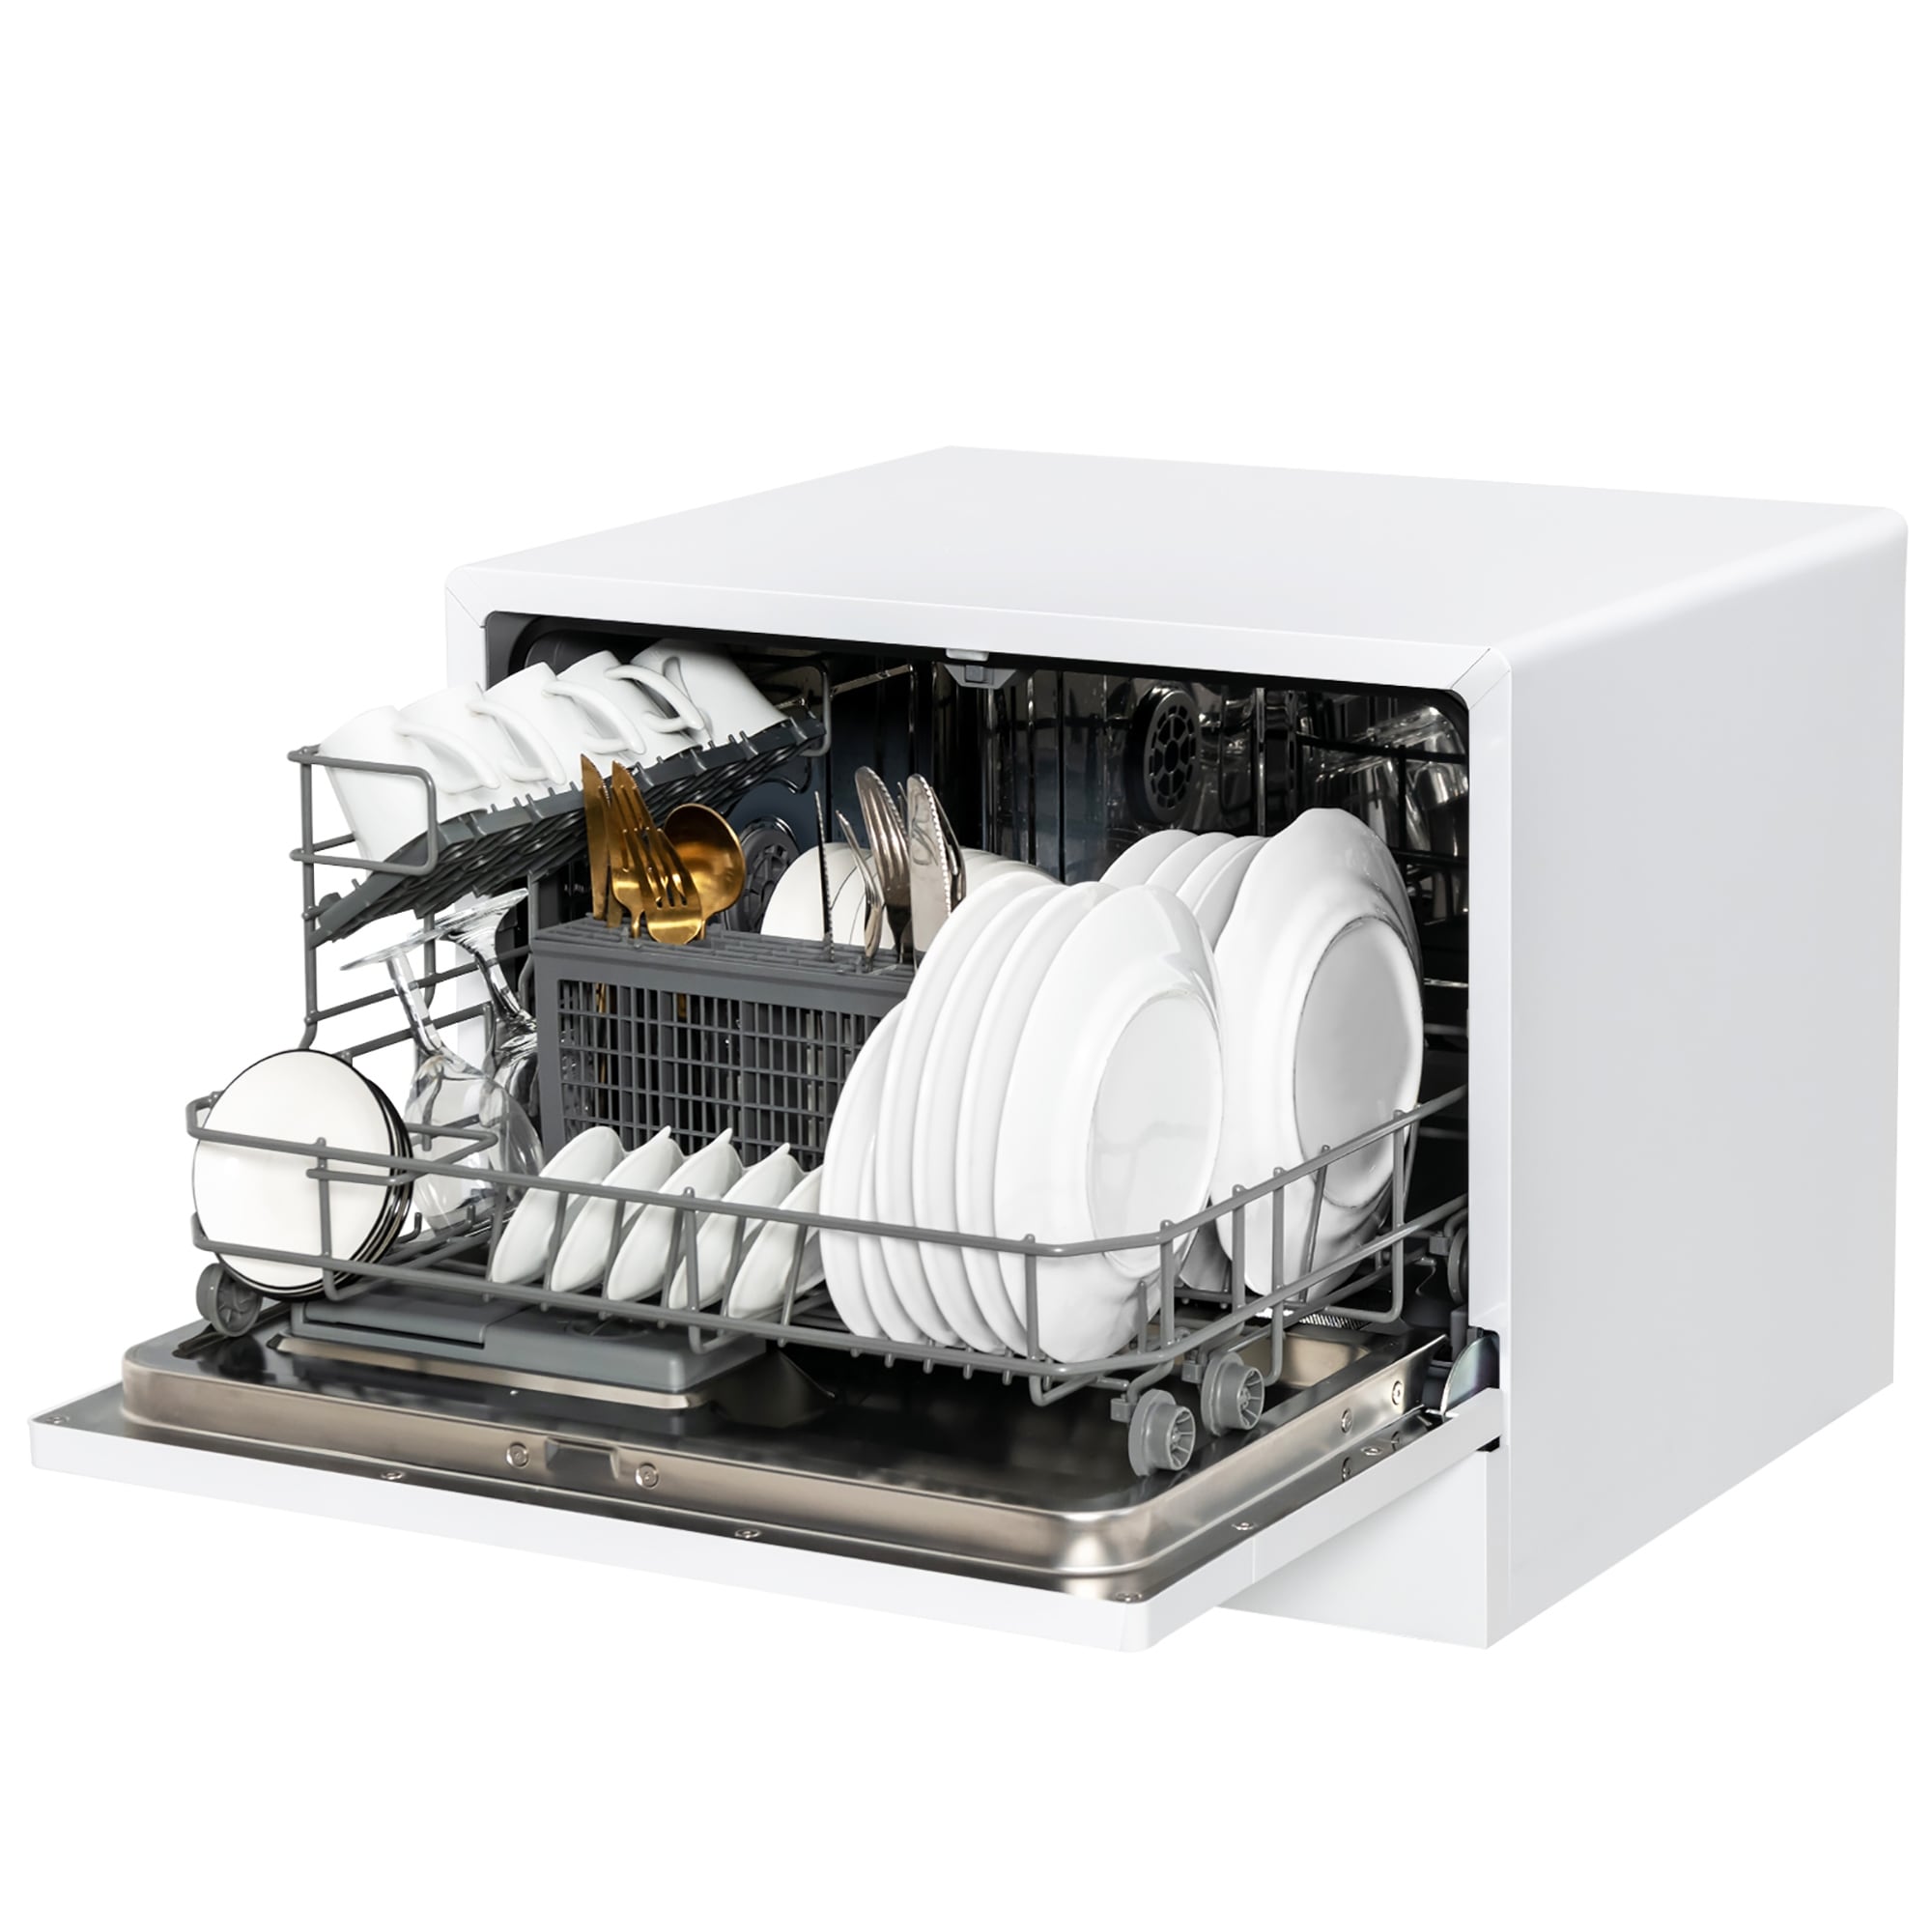 https://ak1.ostkcdn.com/images/products/is/images/direct/22338f63e275c1764e2b7b14e122eda8de7a1ef0/Compact-Countertop-Dishwasher-6-Place-Settings-w--5-Washing-Programs.jpg